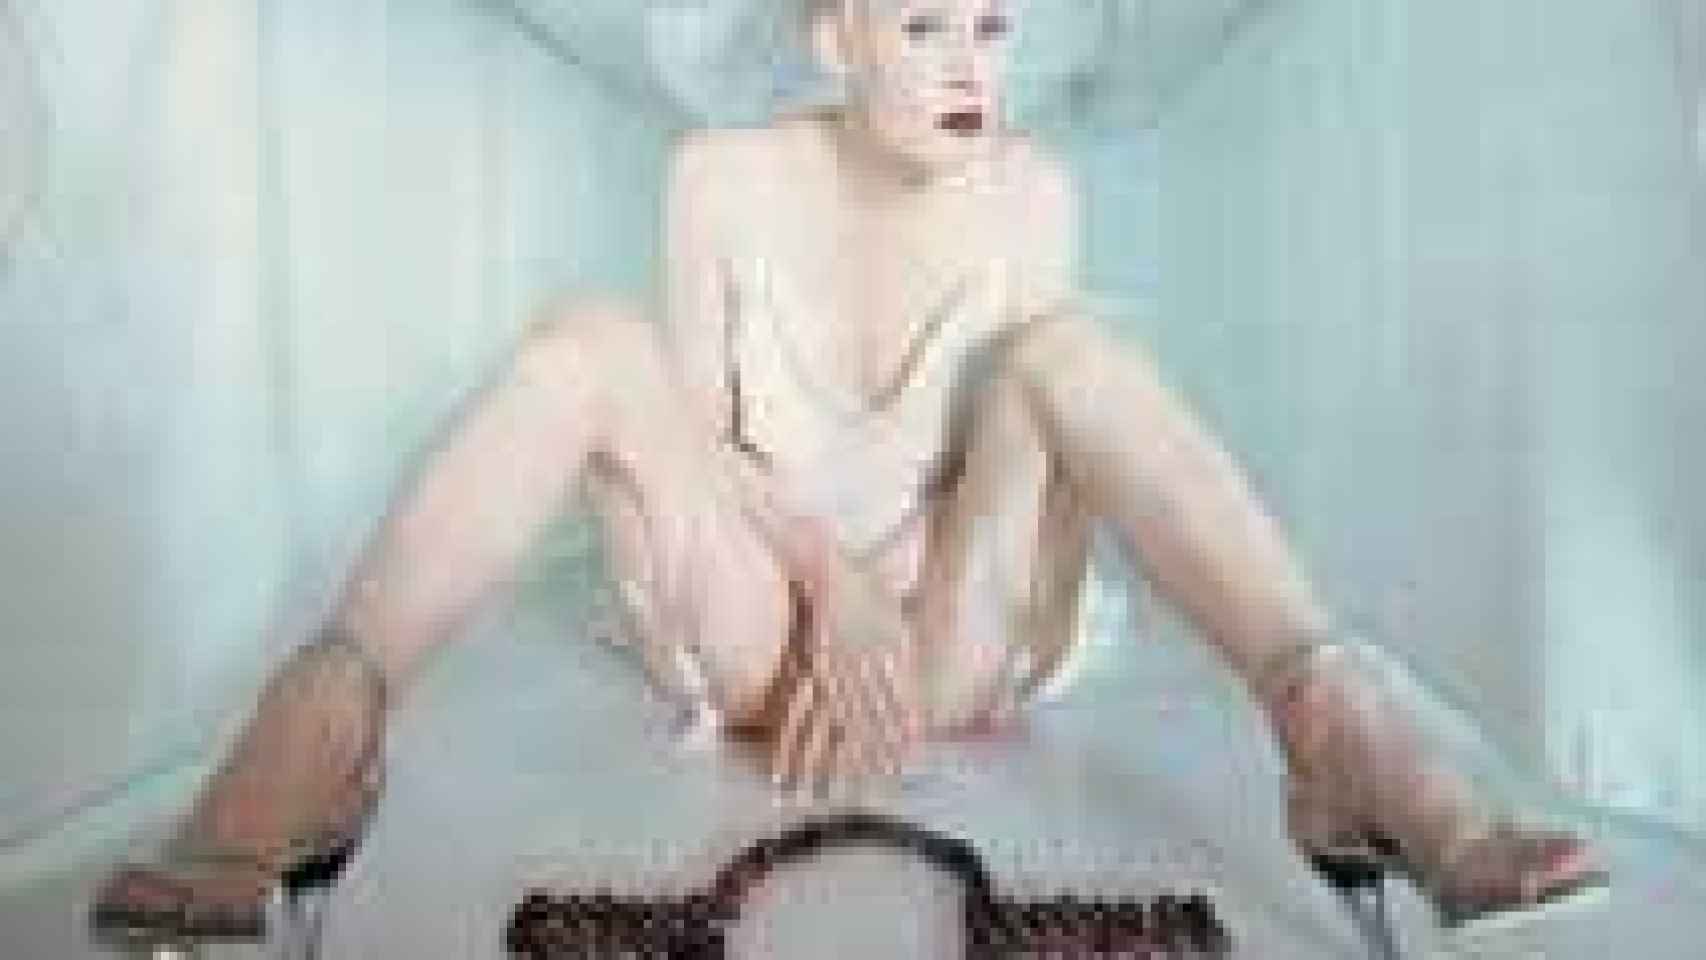 Image: La perversa fantasía de Matthew Barney